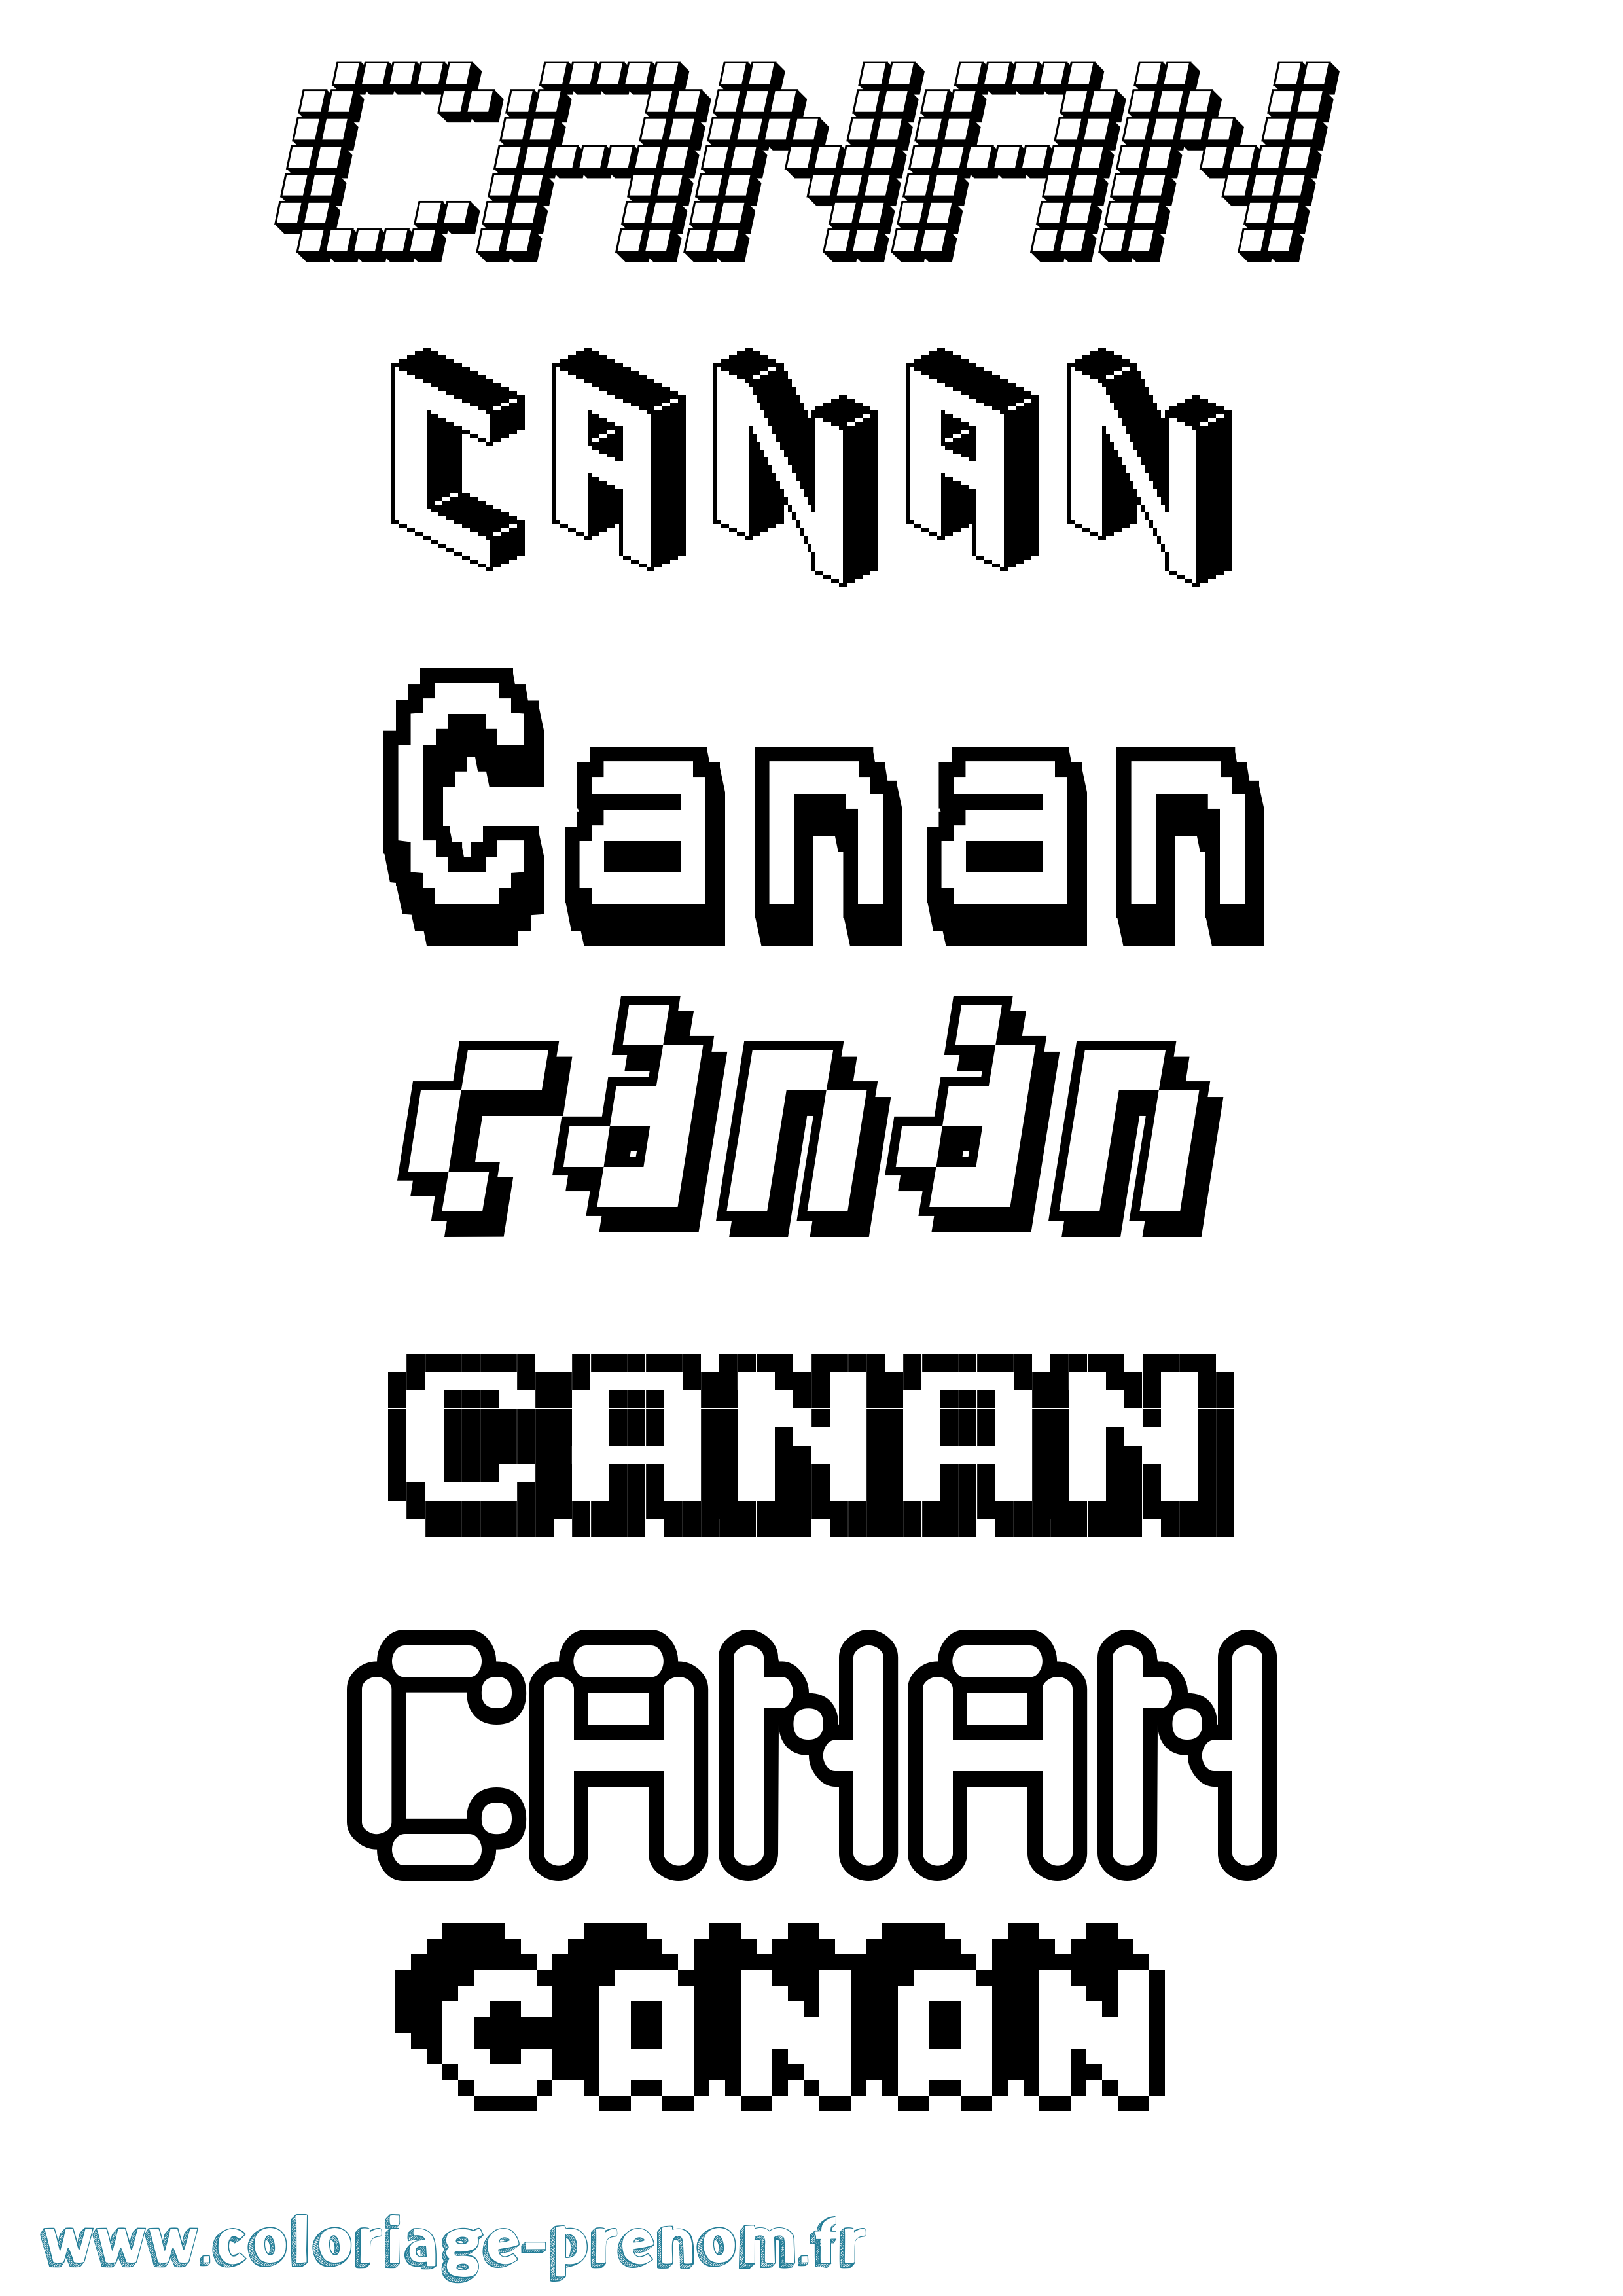 Coloriage prénom Canan Pixel